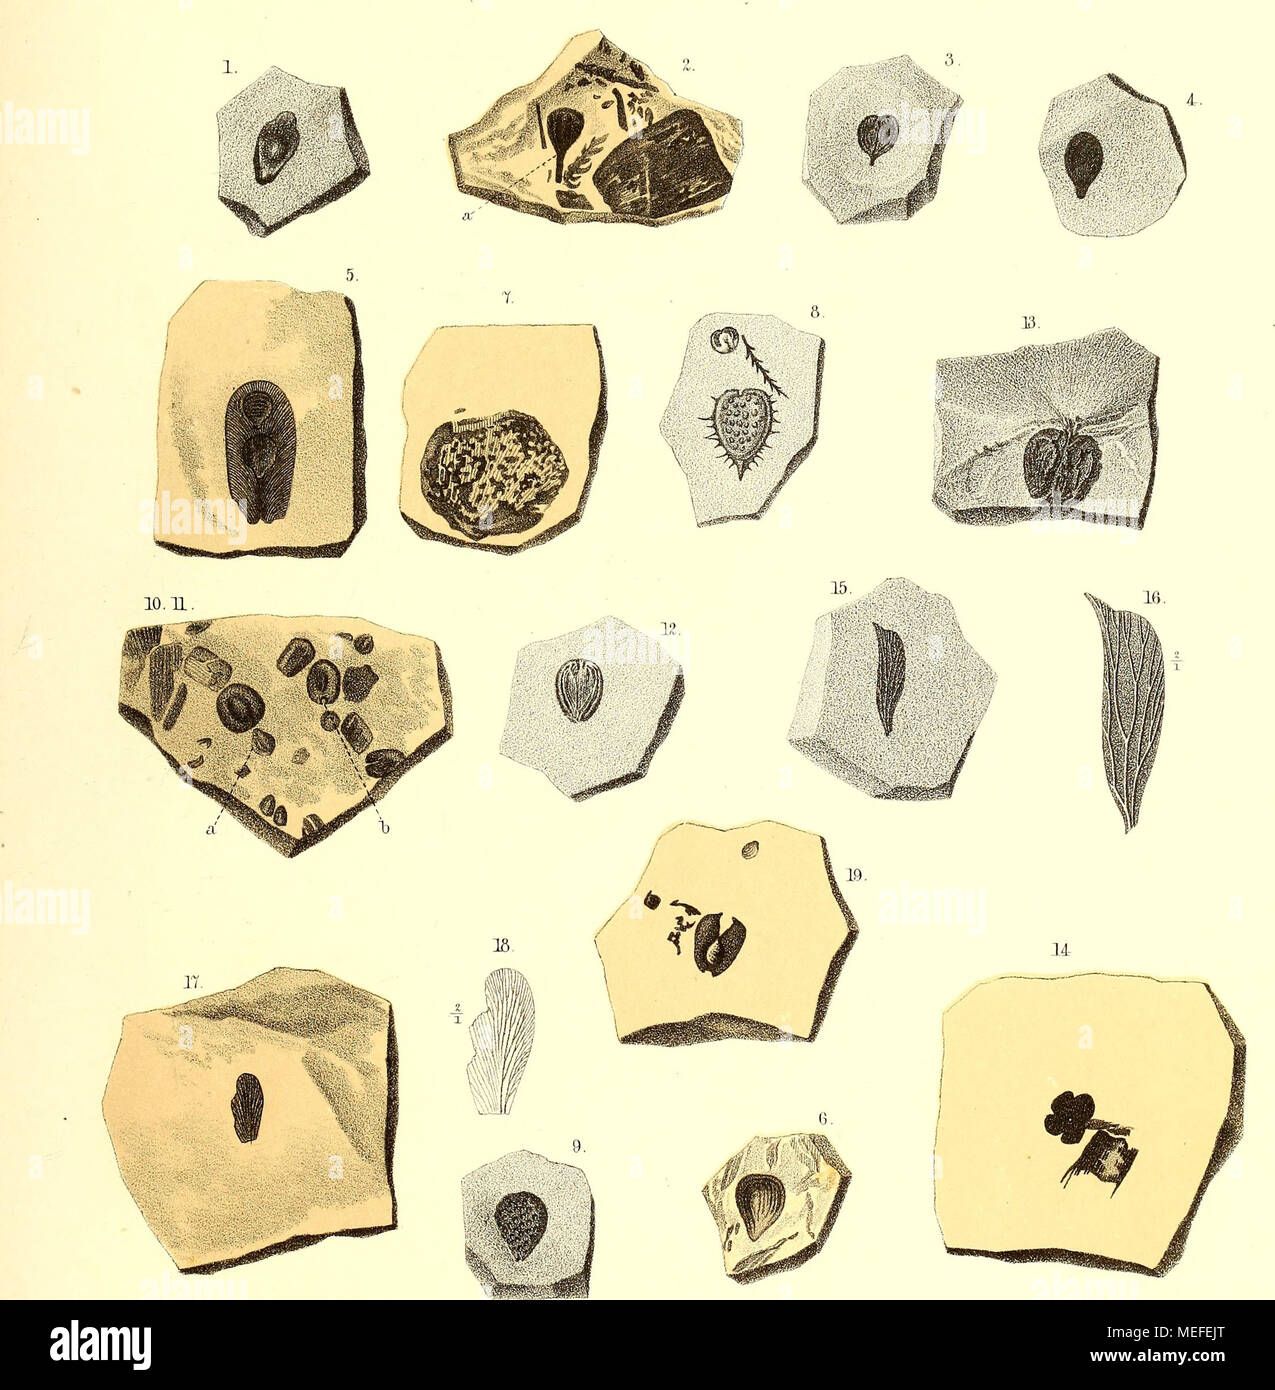 . Die fossile Flora der Permischen Formation . 1. Cardiocarpus umbonatus Göpp. — 2. C. attcnuatus Göpp. — 3. C. pedicellatus Göpp. — 4. C. apiculatus Göpp. Berg. — 5. Ii. C. subtriangulus Göpp. — 7. Cyclocarpus vanniformis Göpp. — 8. 9. Acantliocarpus xanthioides Göpp, 10. 11. Samaropsis ulmiformis Göpp. — 12. 13. Didymotheca cordata Göpp. — 15 — 19. Flügel von Insekten, ähnlich Rhynchotis. Stock Photo